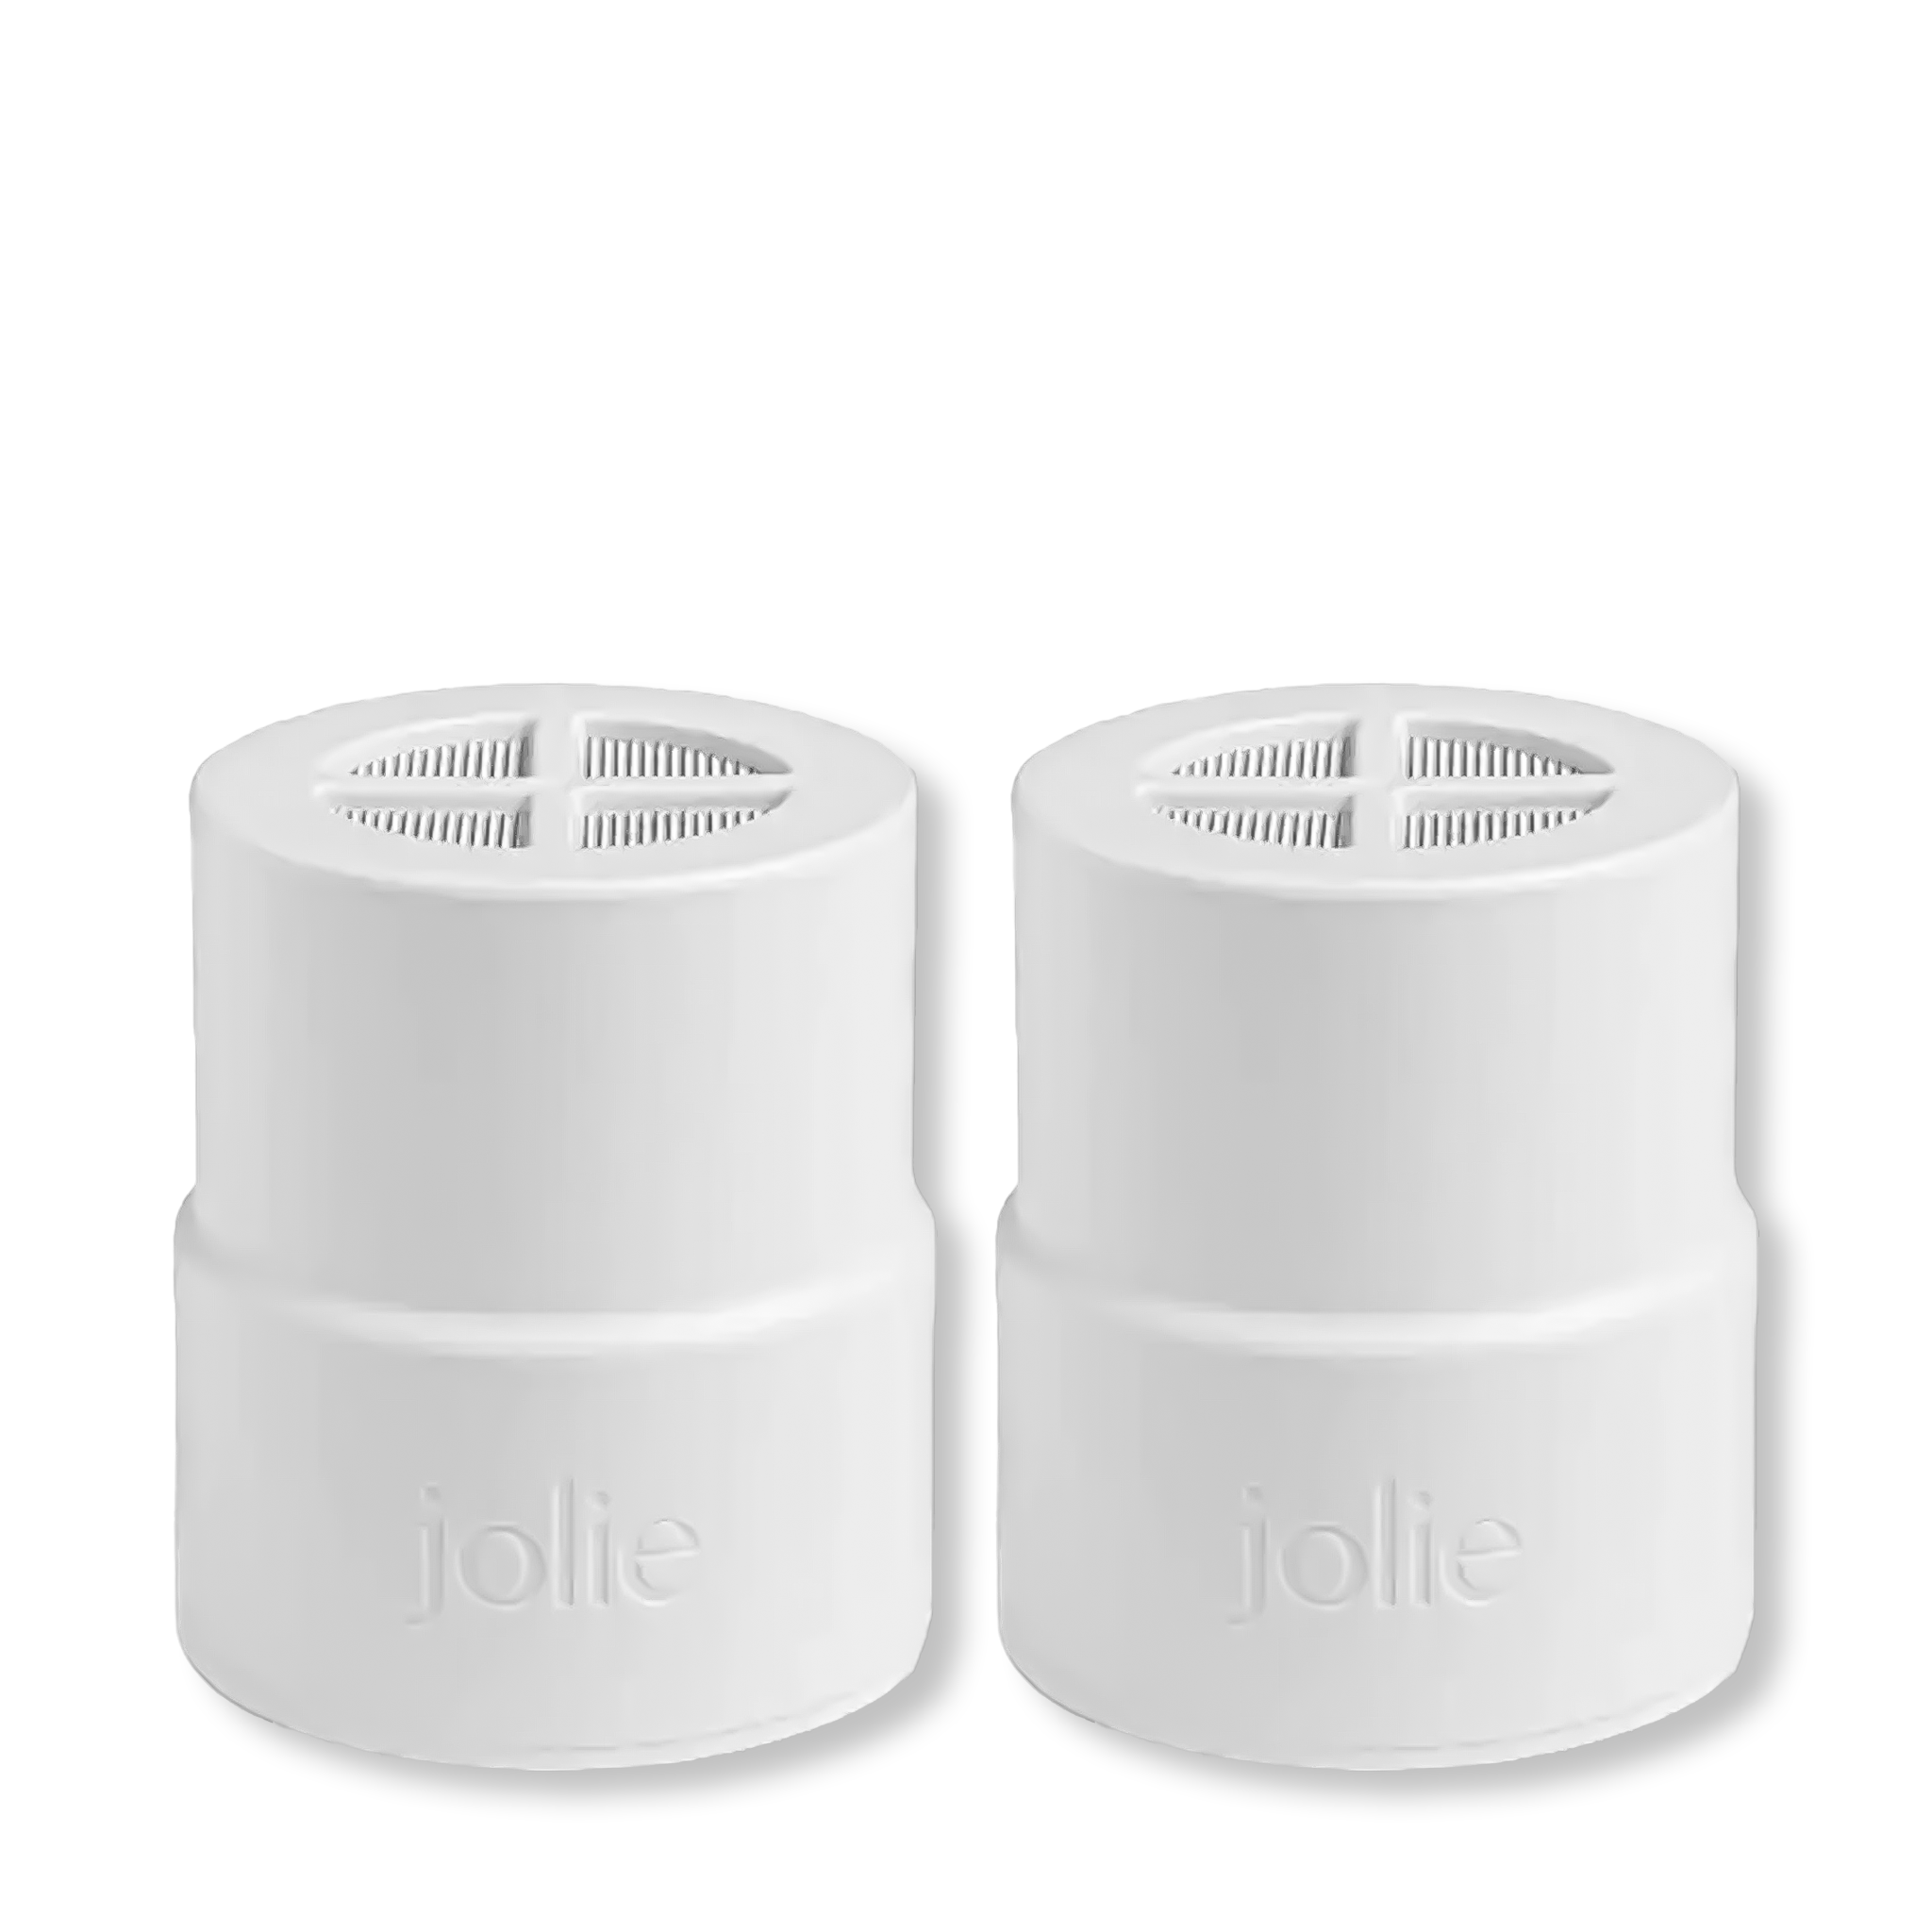 Jolie Replacement Filter